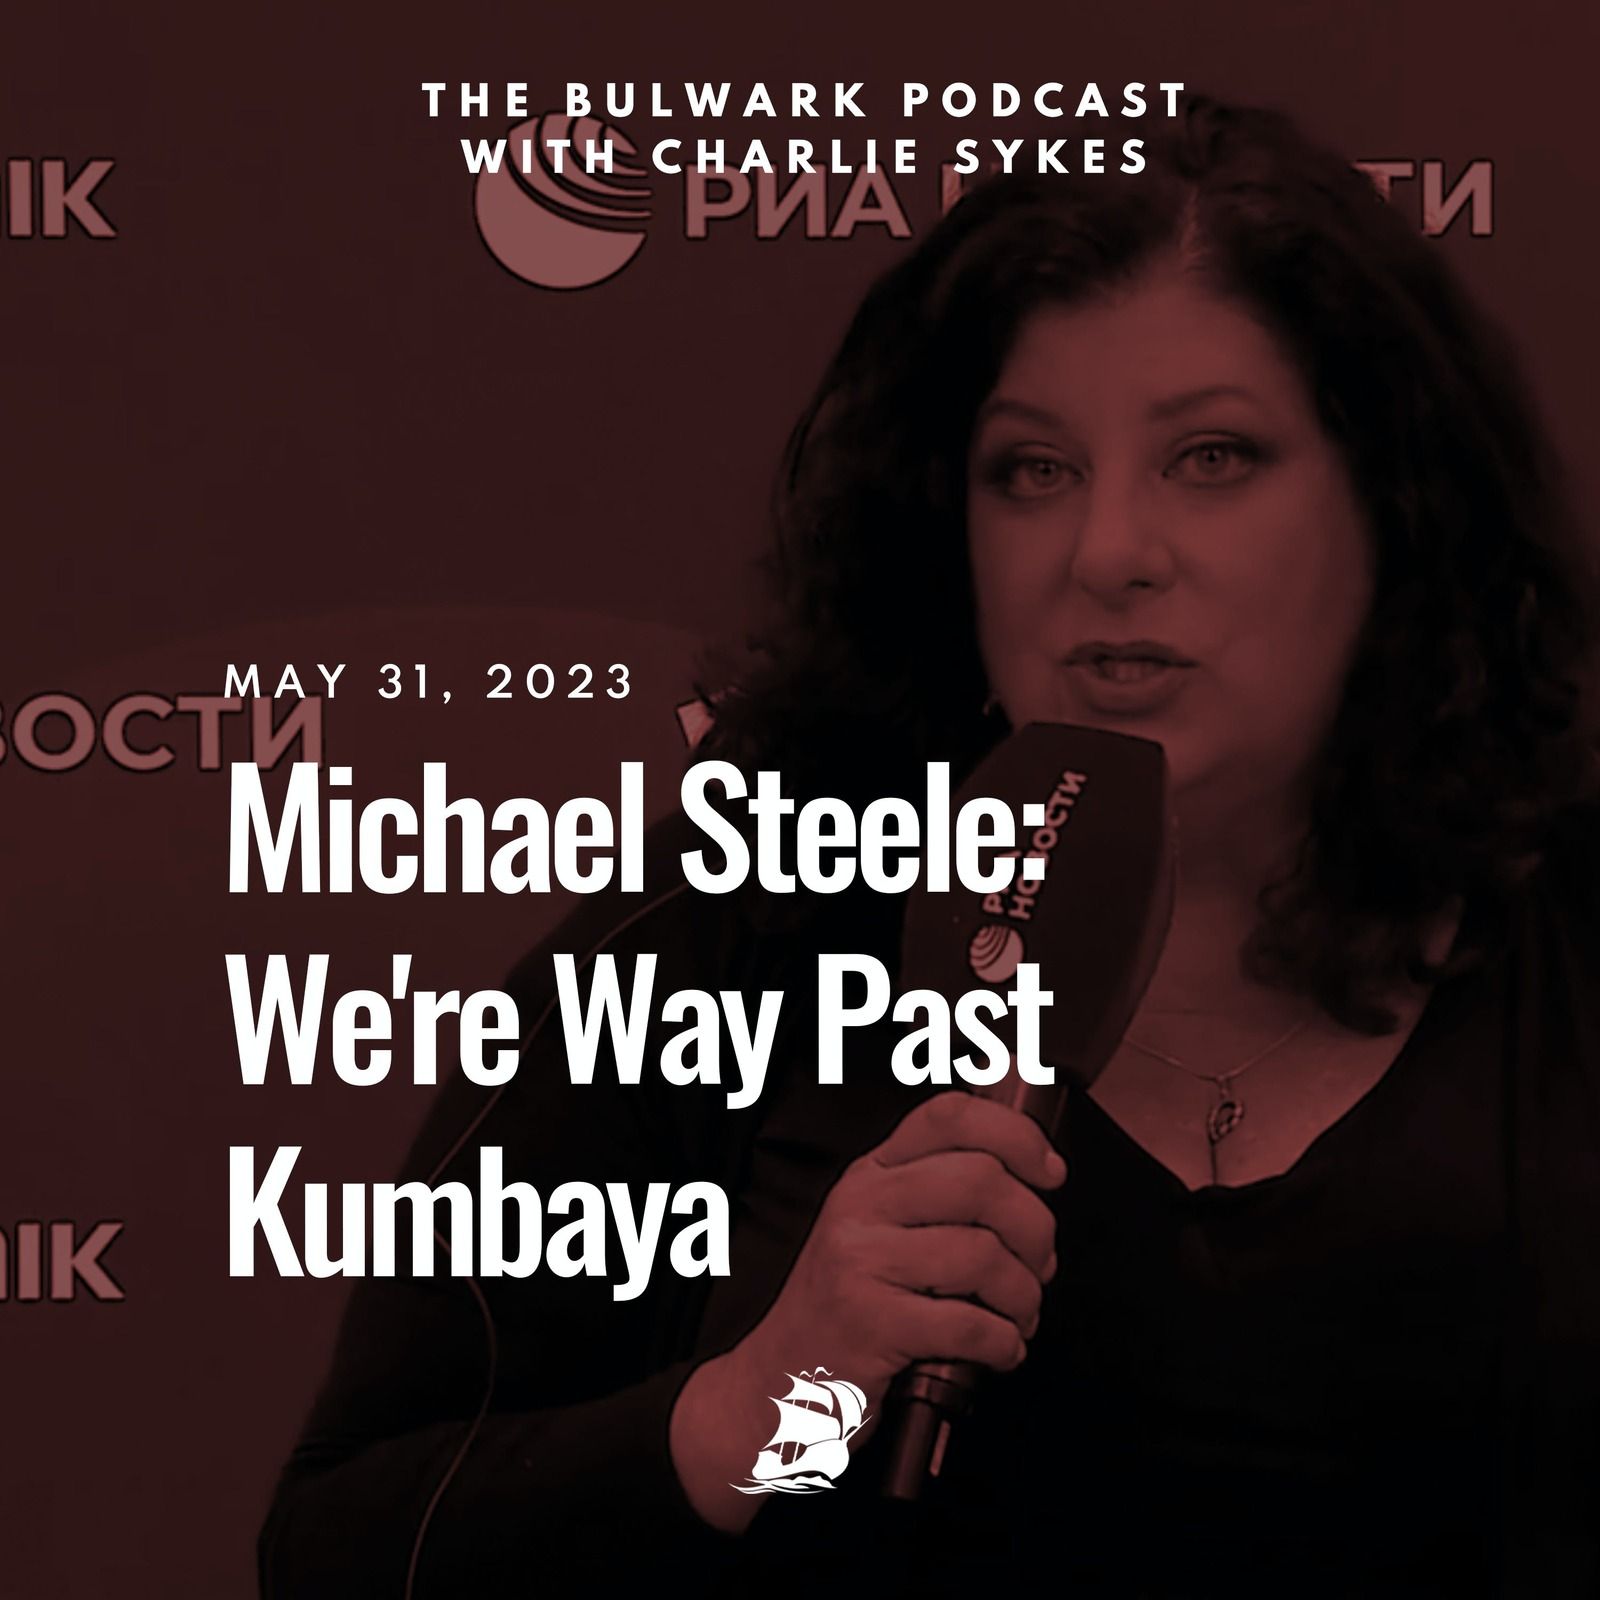 Michael Steele: We're Way Past Kumbaya